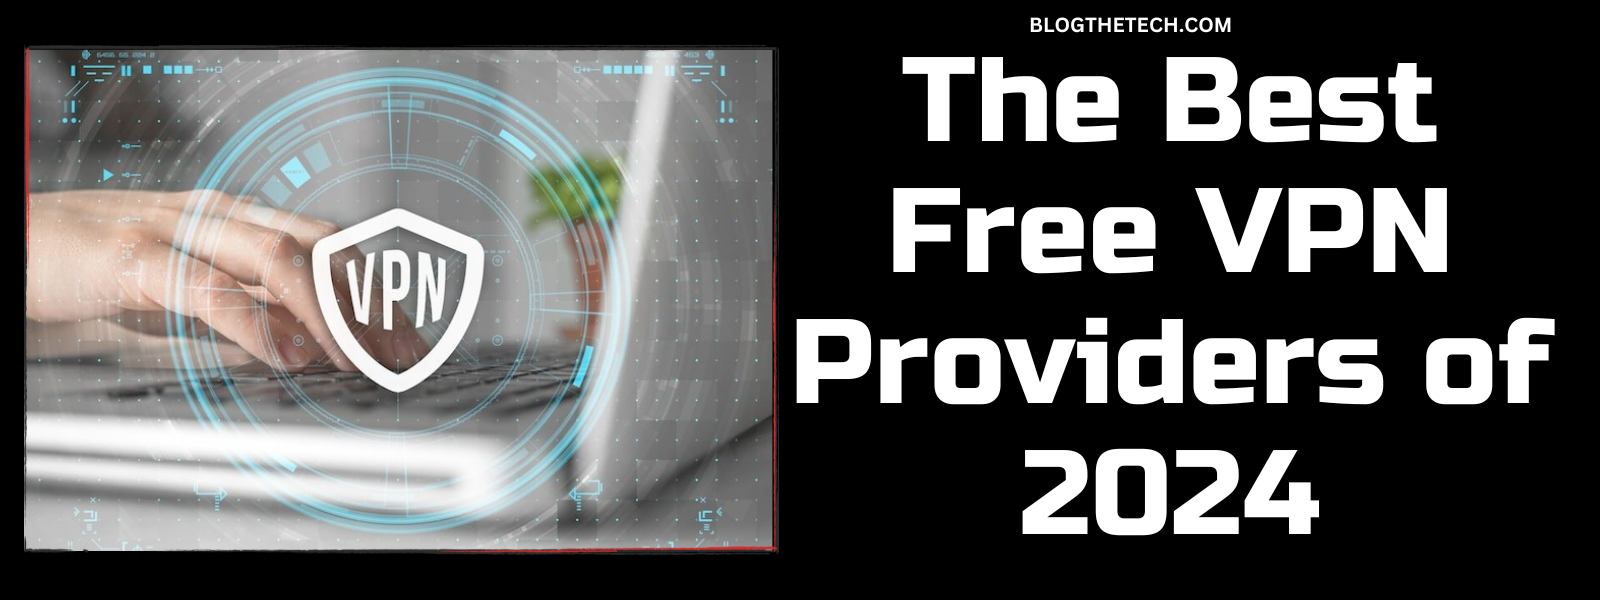 The Best Free VPN Providers